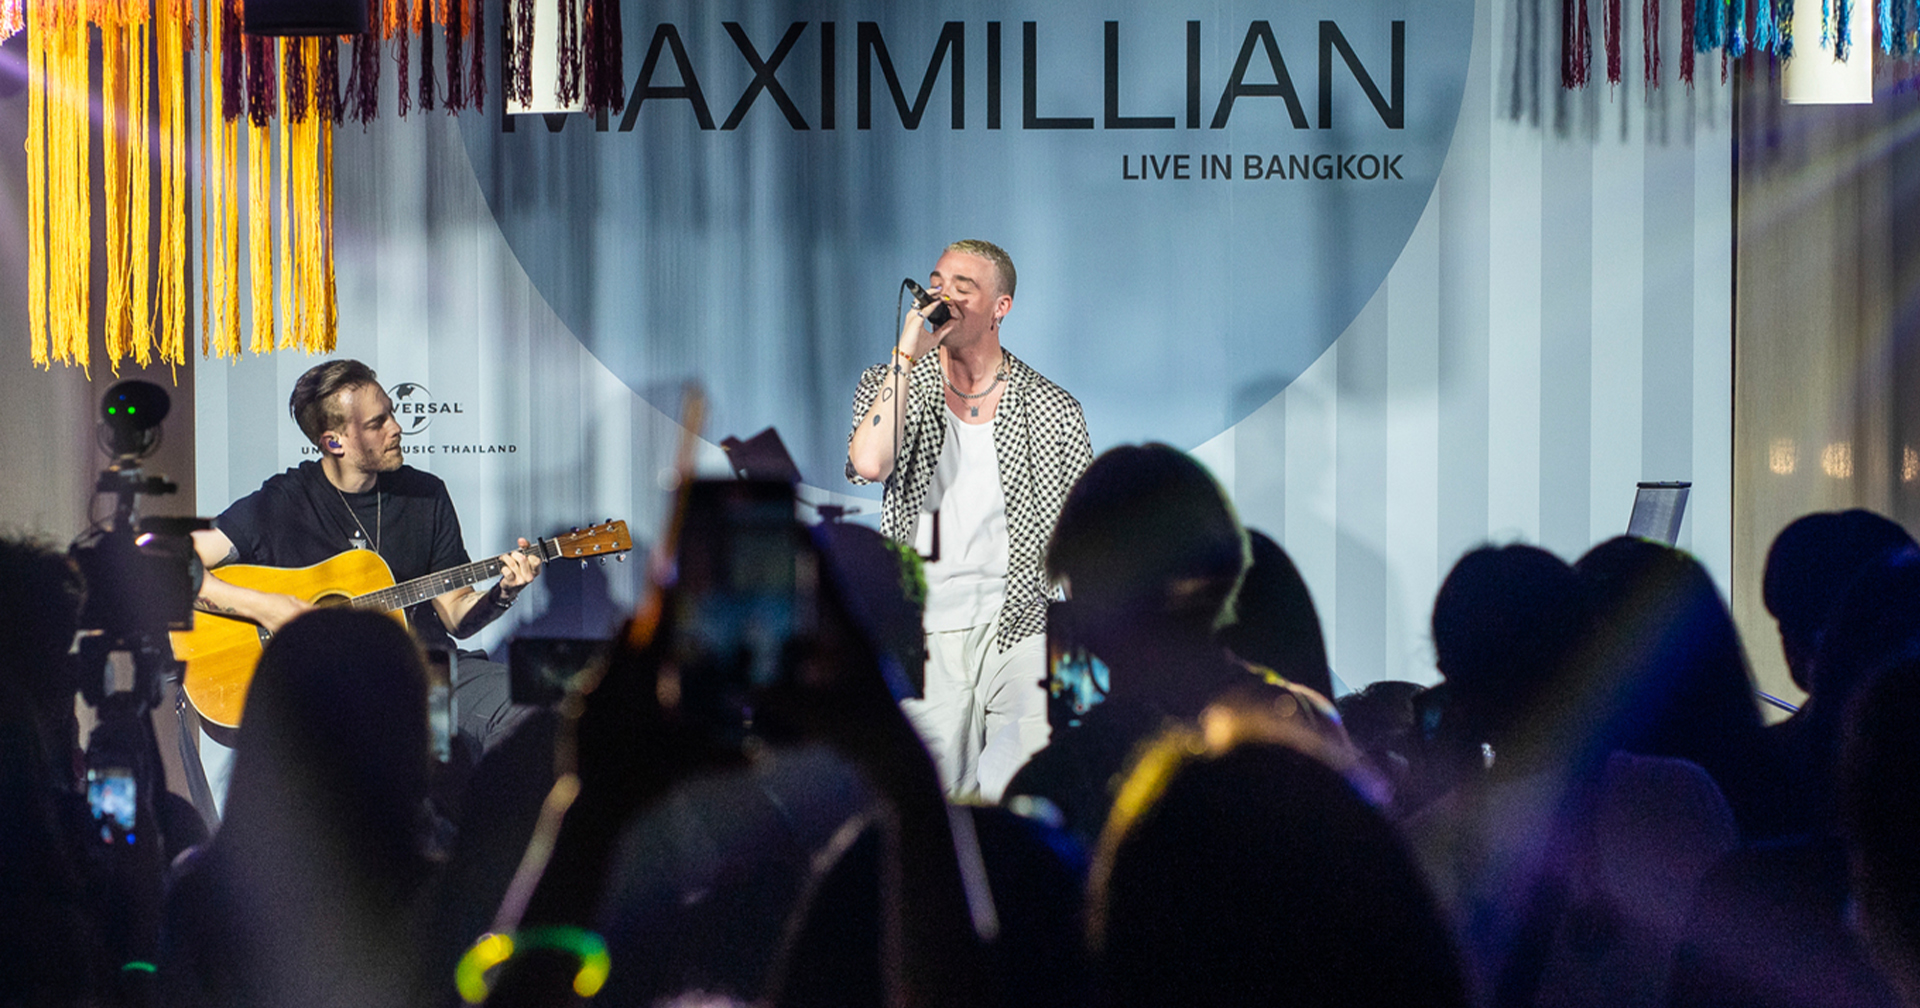 Maximillian จัด Exclusive Fan Meet และ Showcase ครั้งแรกในไทย พร้อมโปรโมตเพลงใหม่ “I’m Not Me”